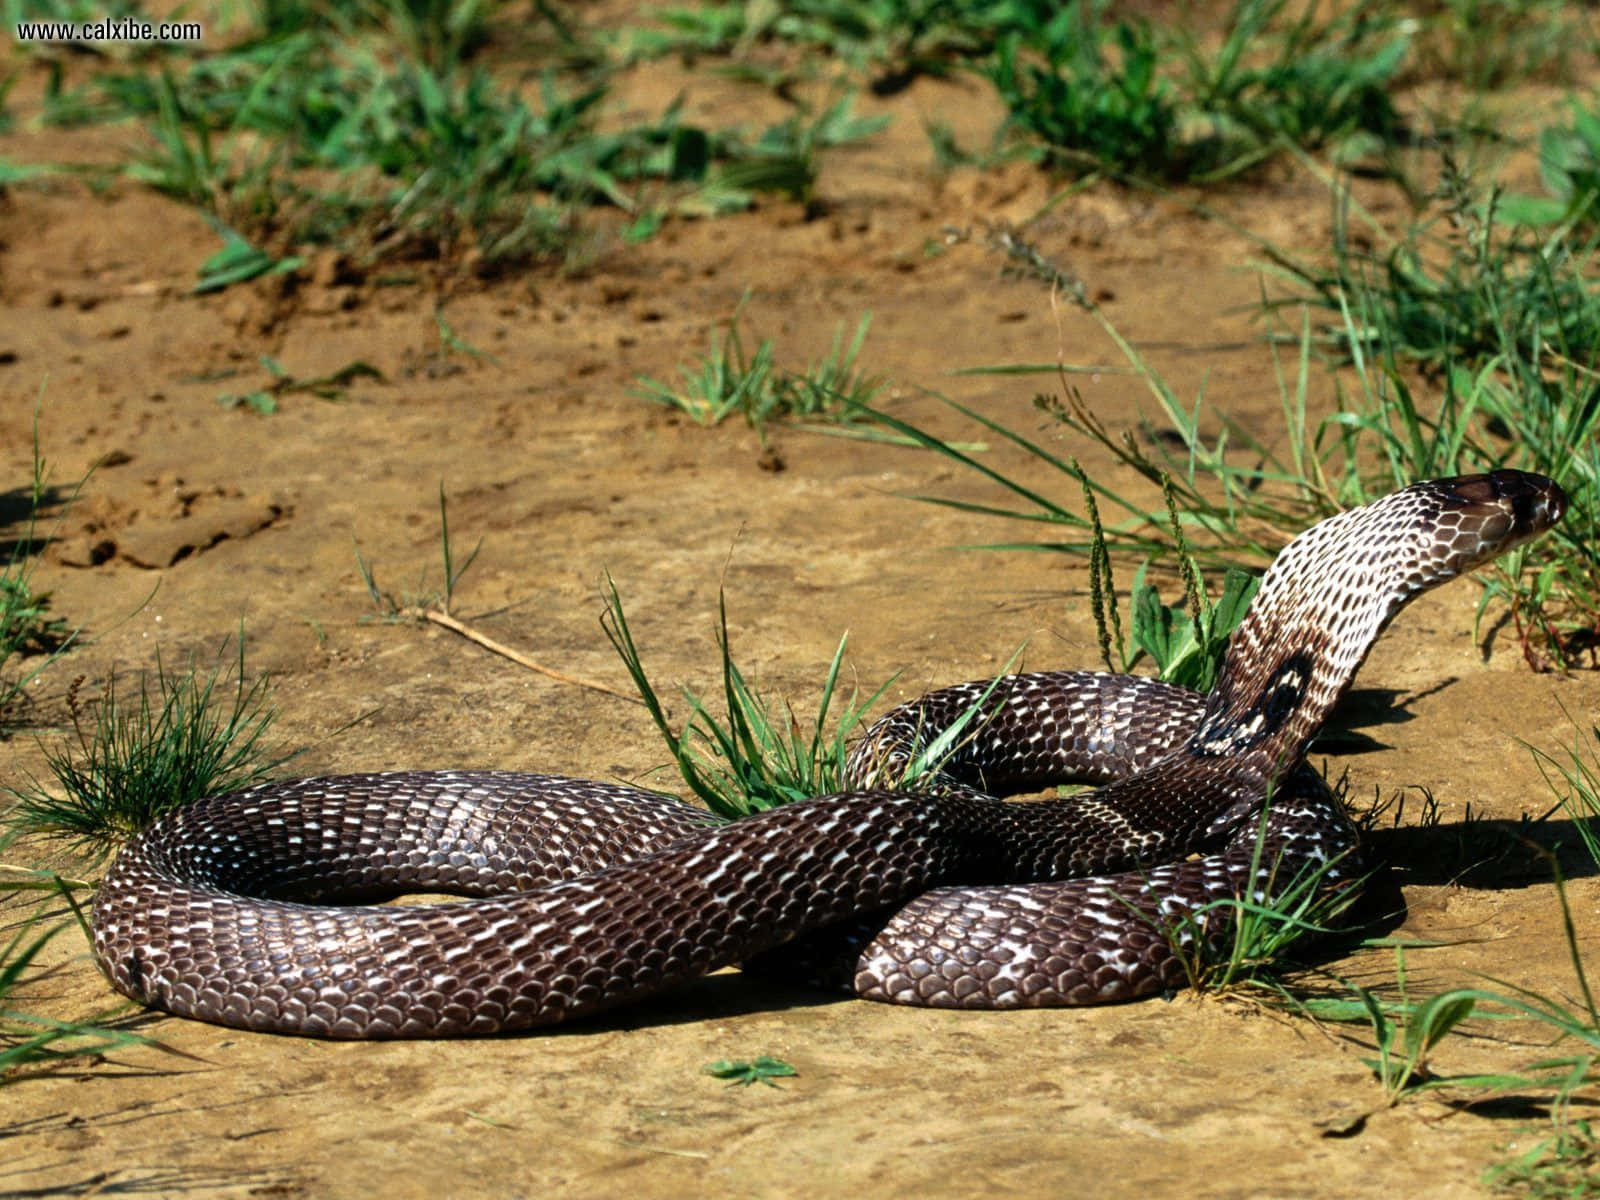 A King Cobra snake snaking through the jungle